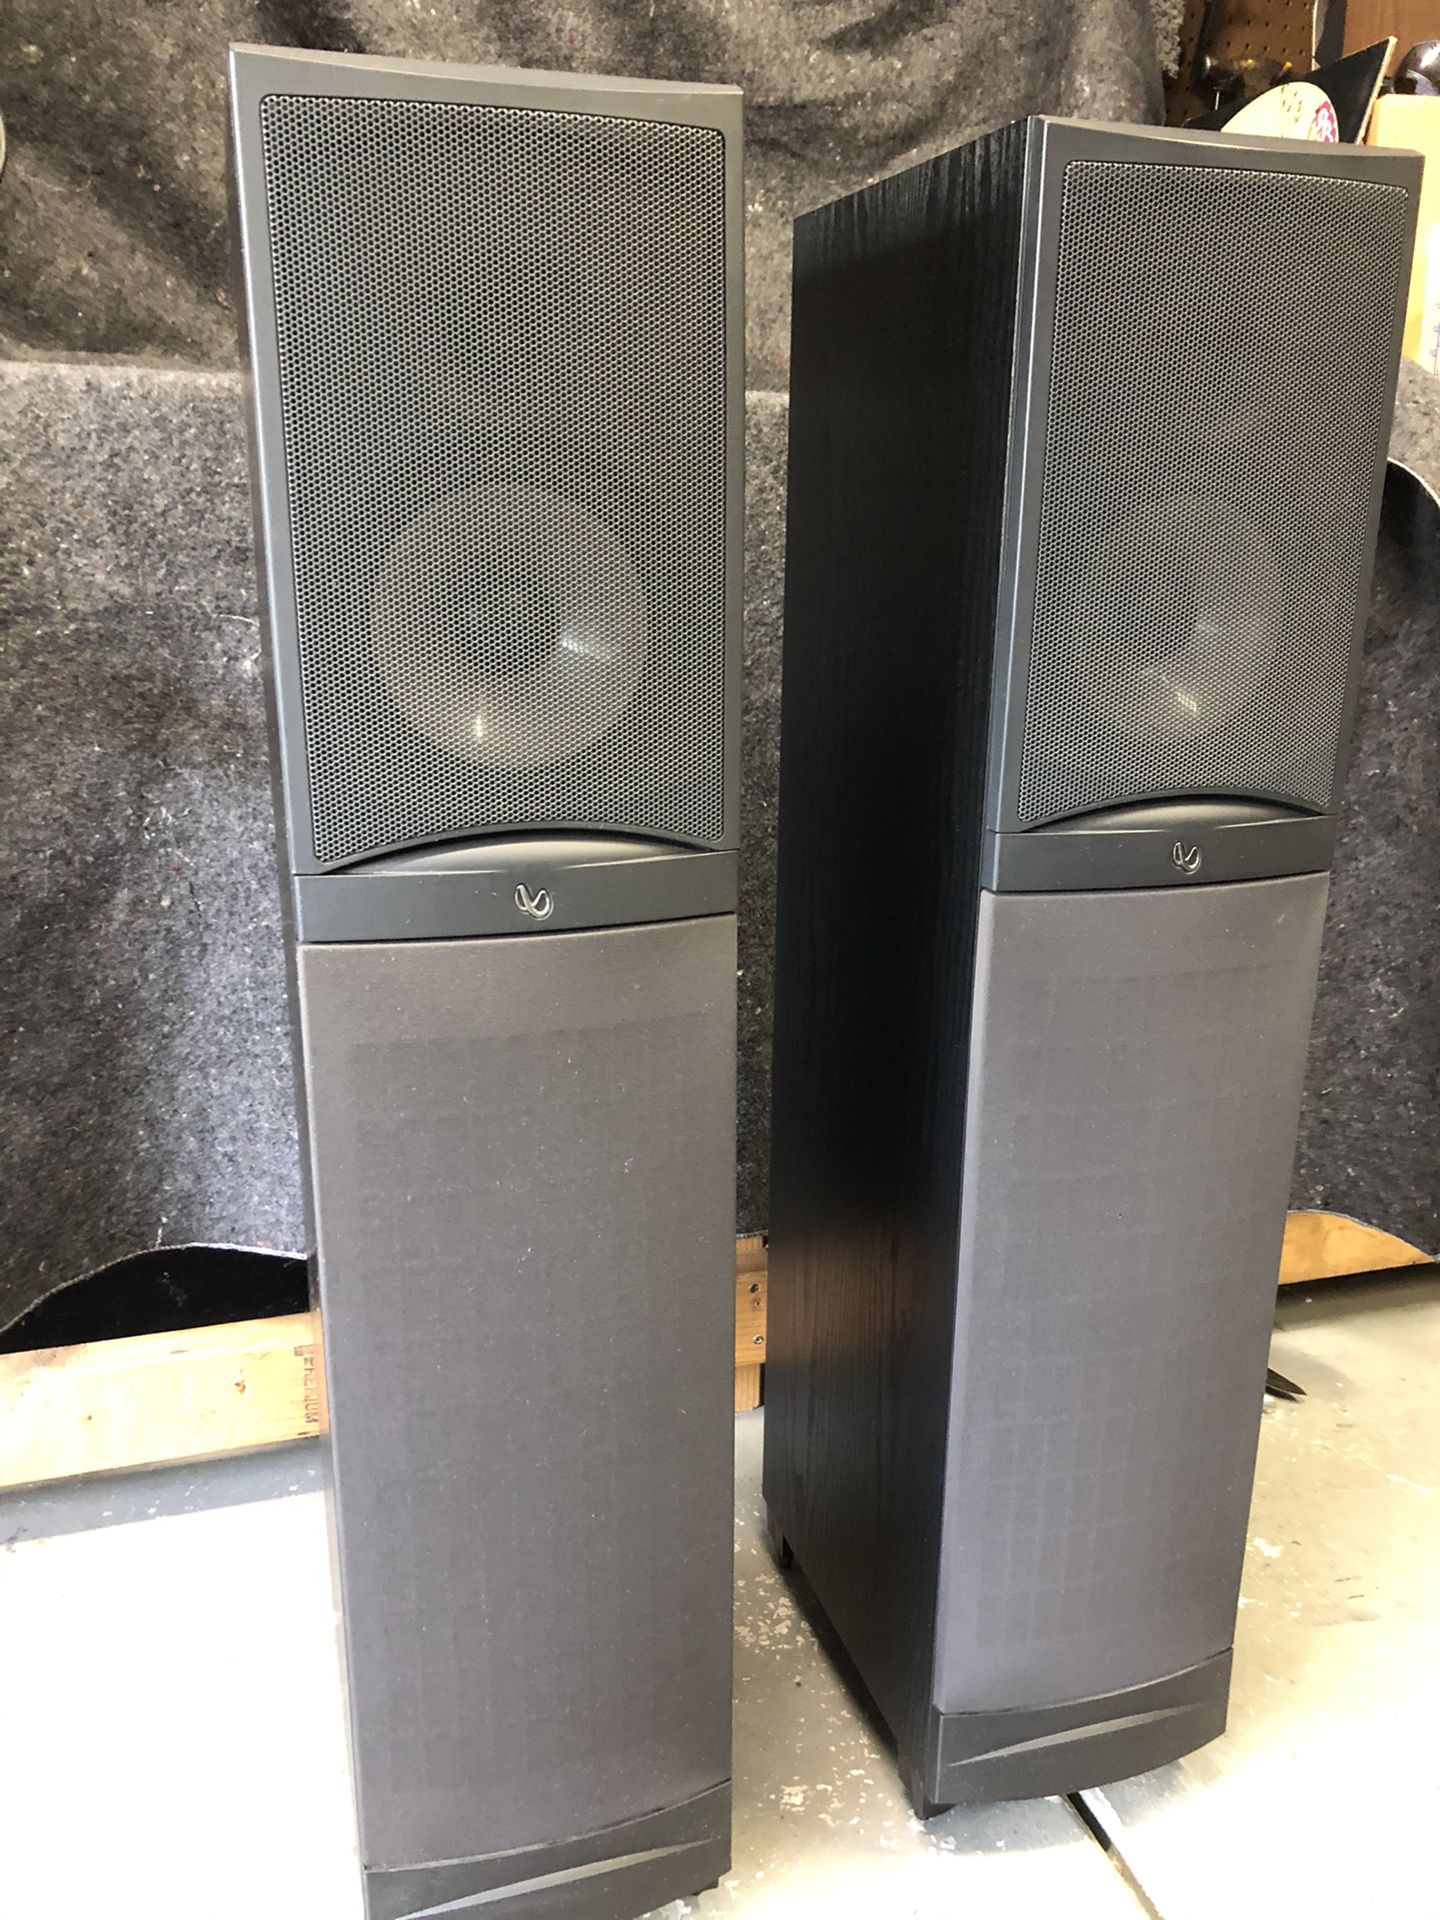 Infinity RS 4 audiophile speakers